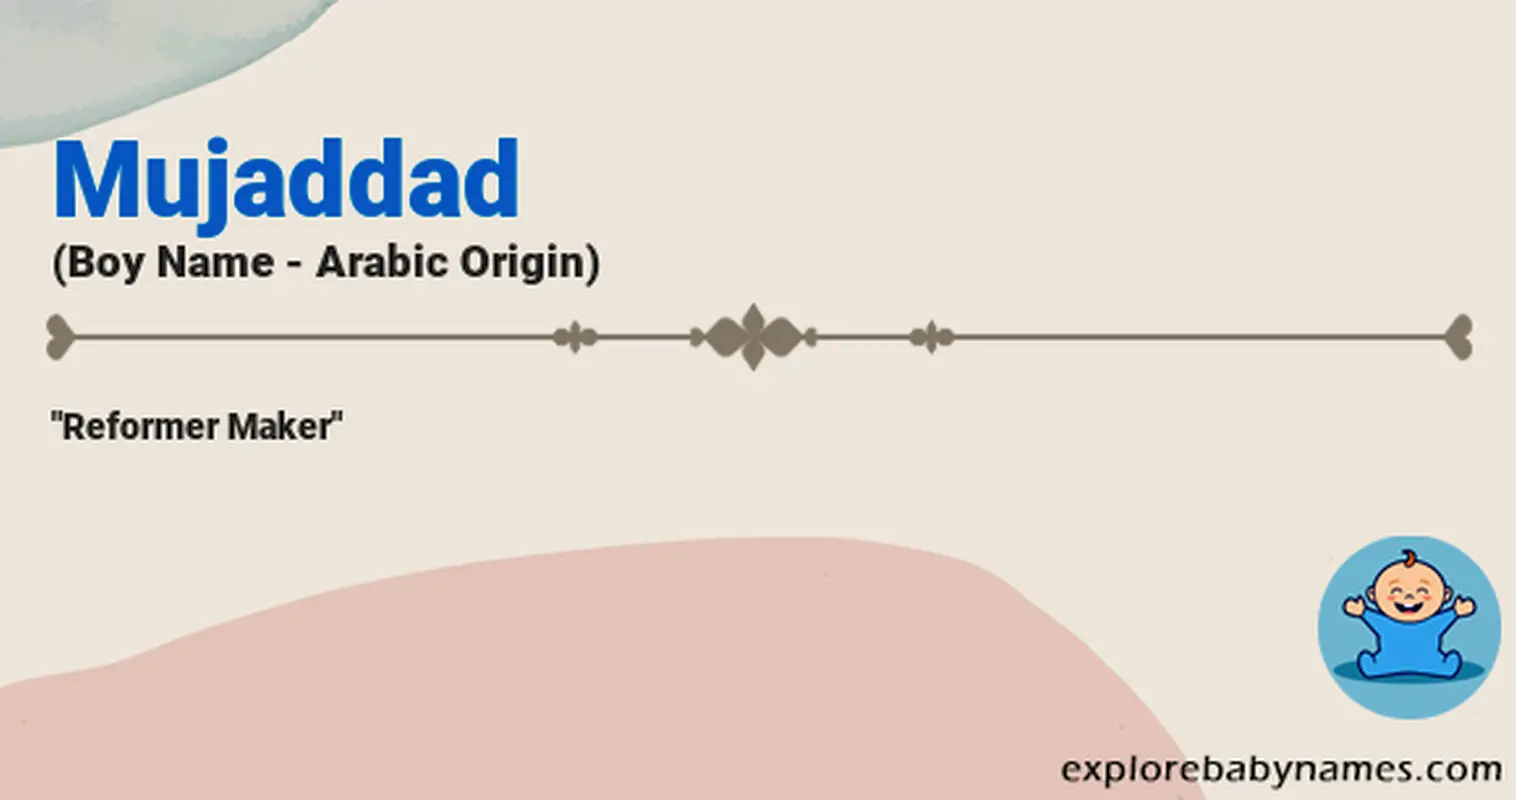 Meaning of Mujaddad